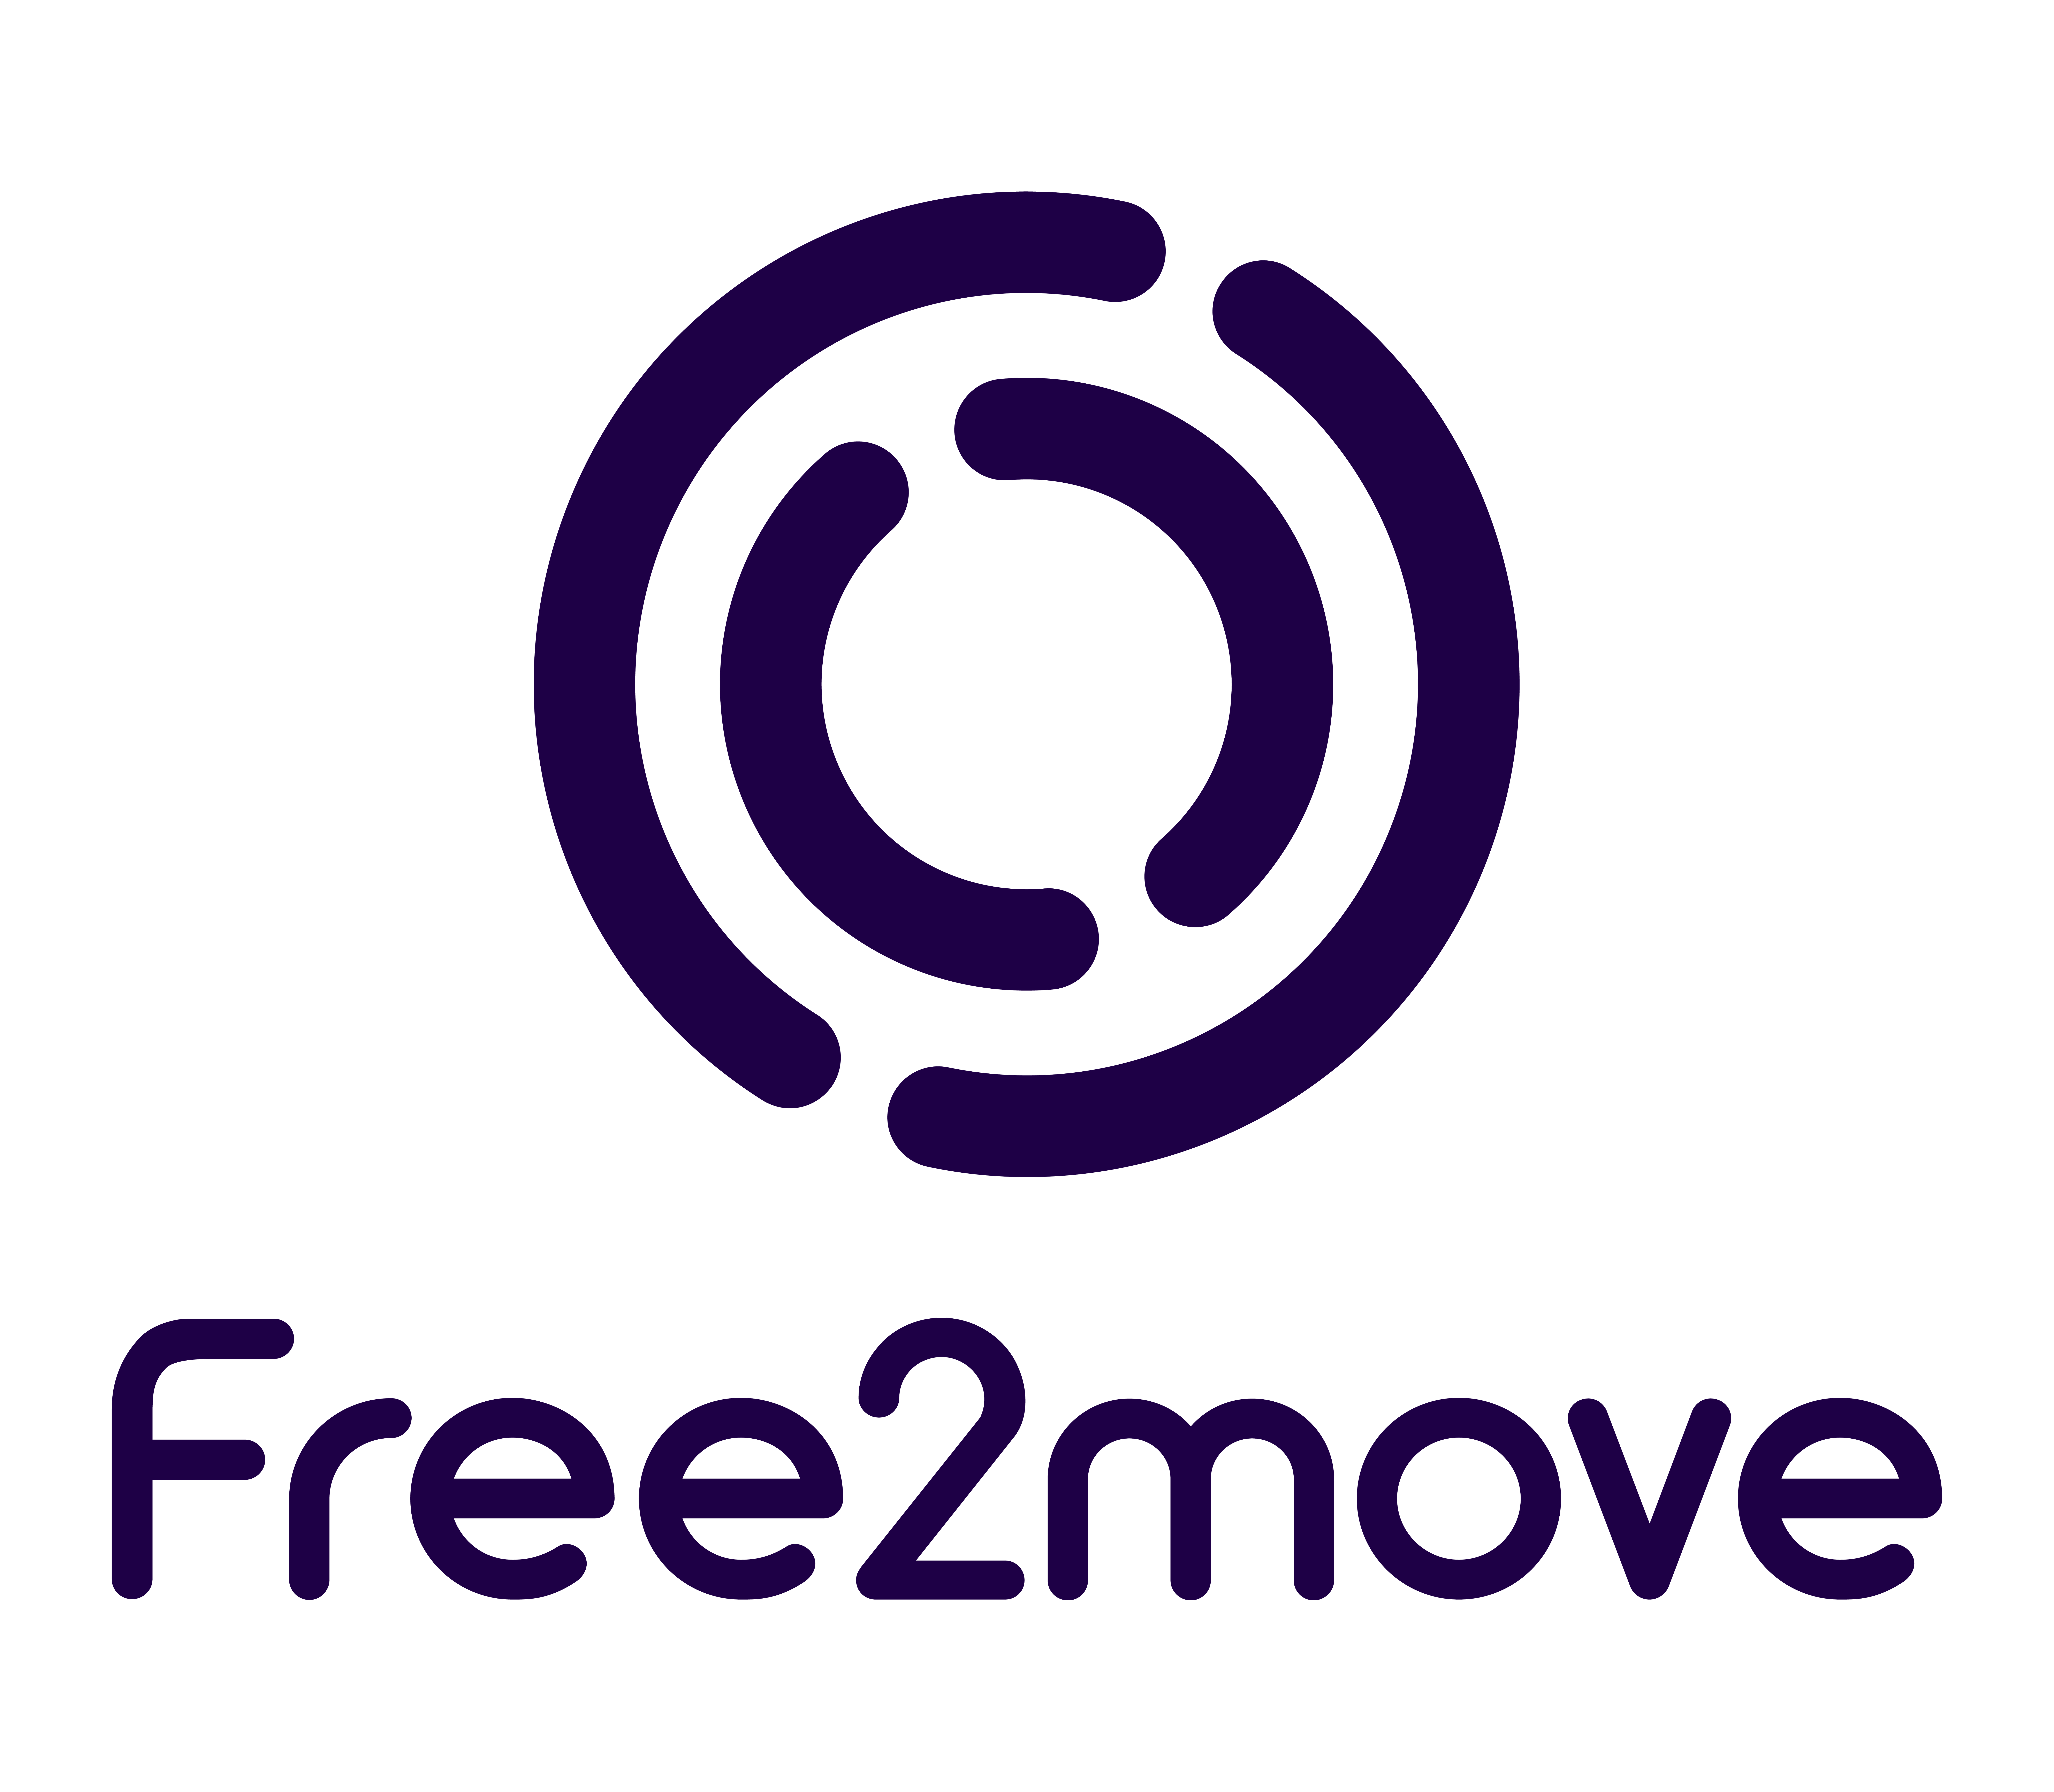 image of Free2move logo